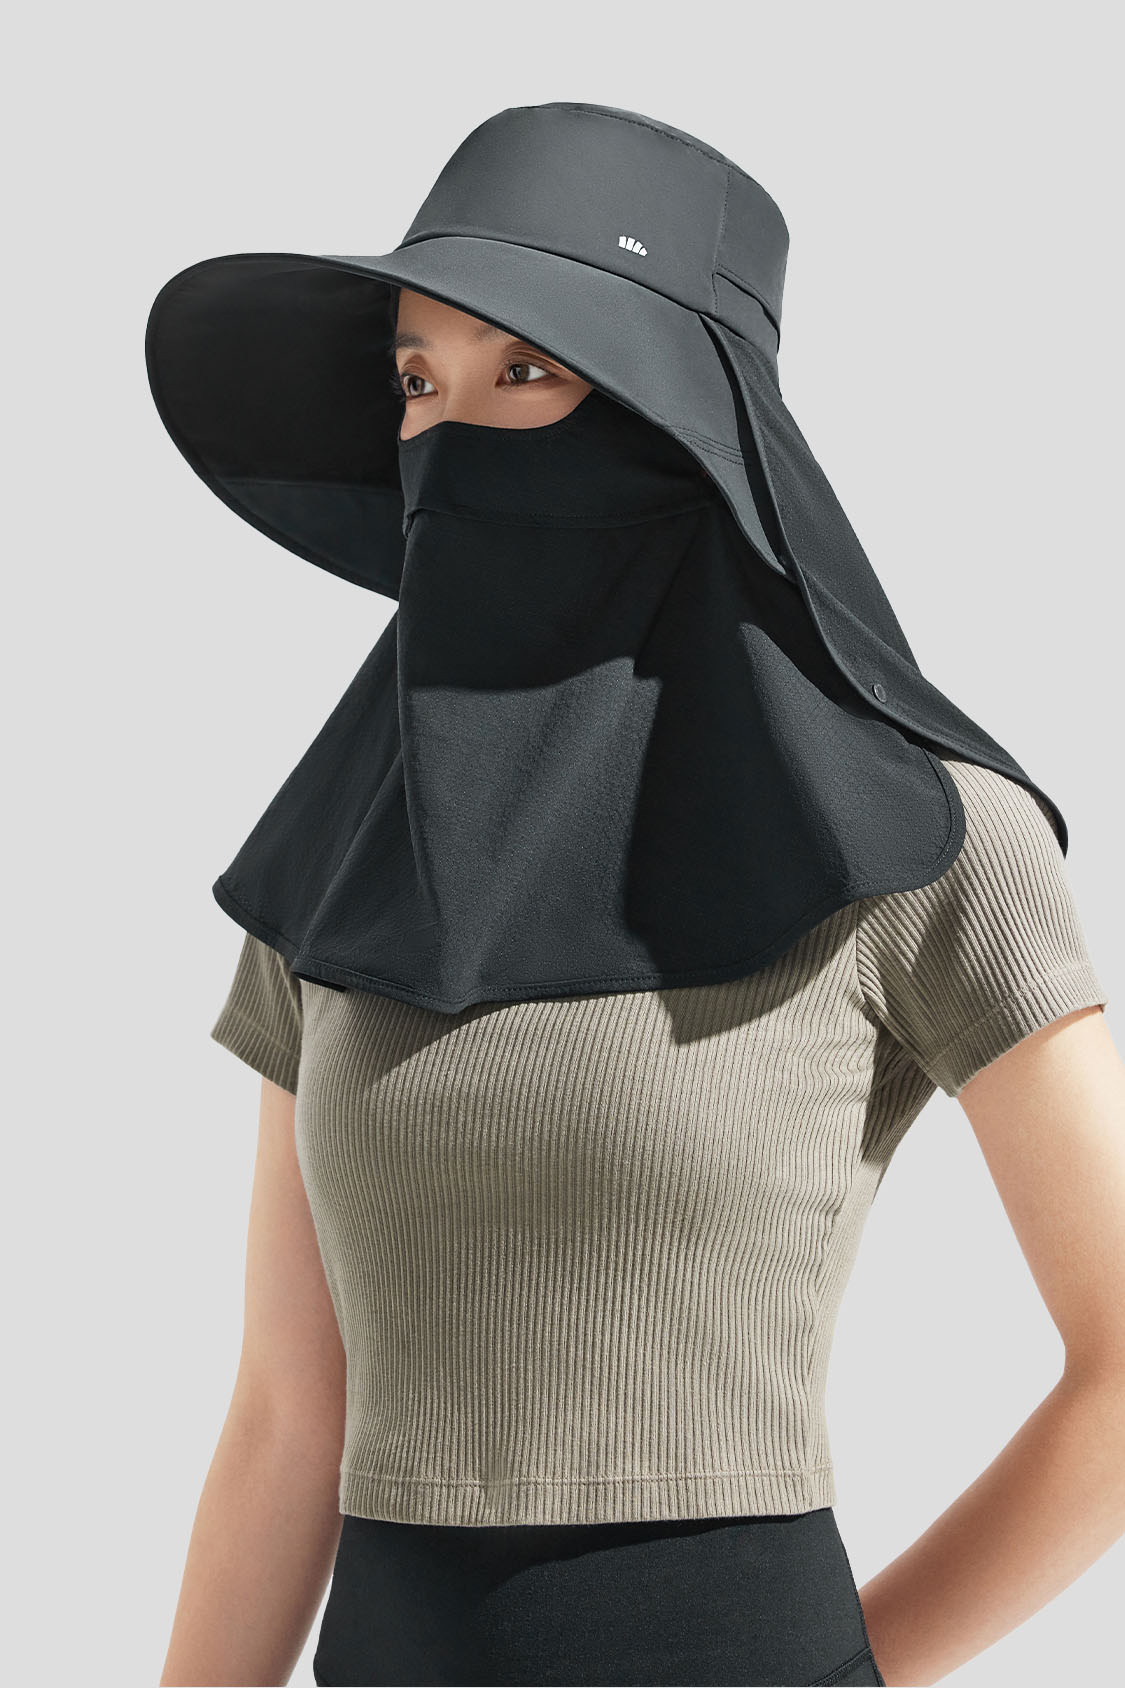 beneunder women's outdoor full coverage hat UPF 50+ color_black